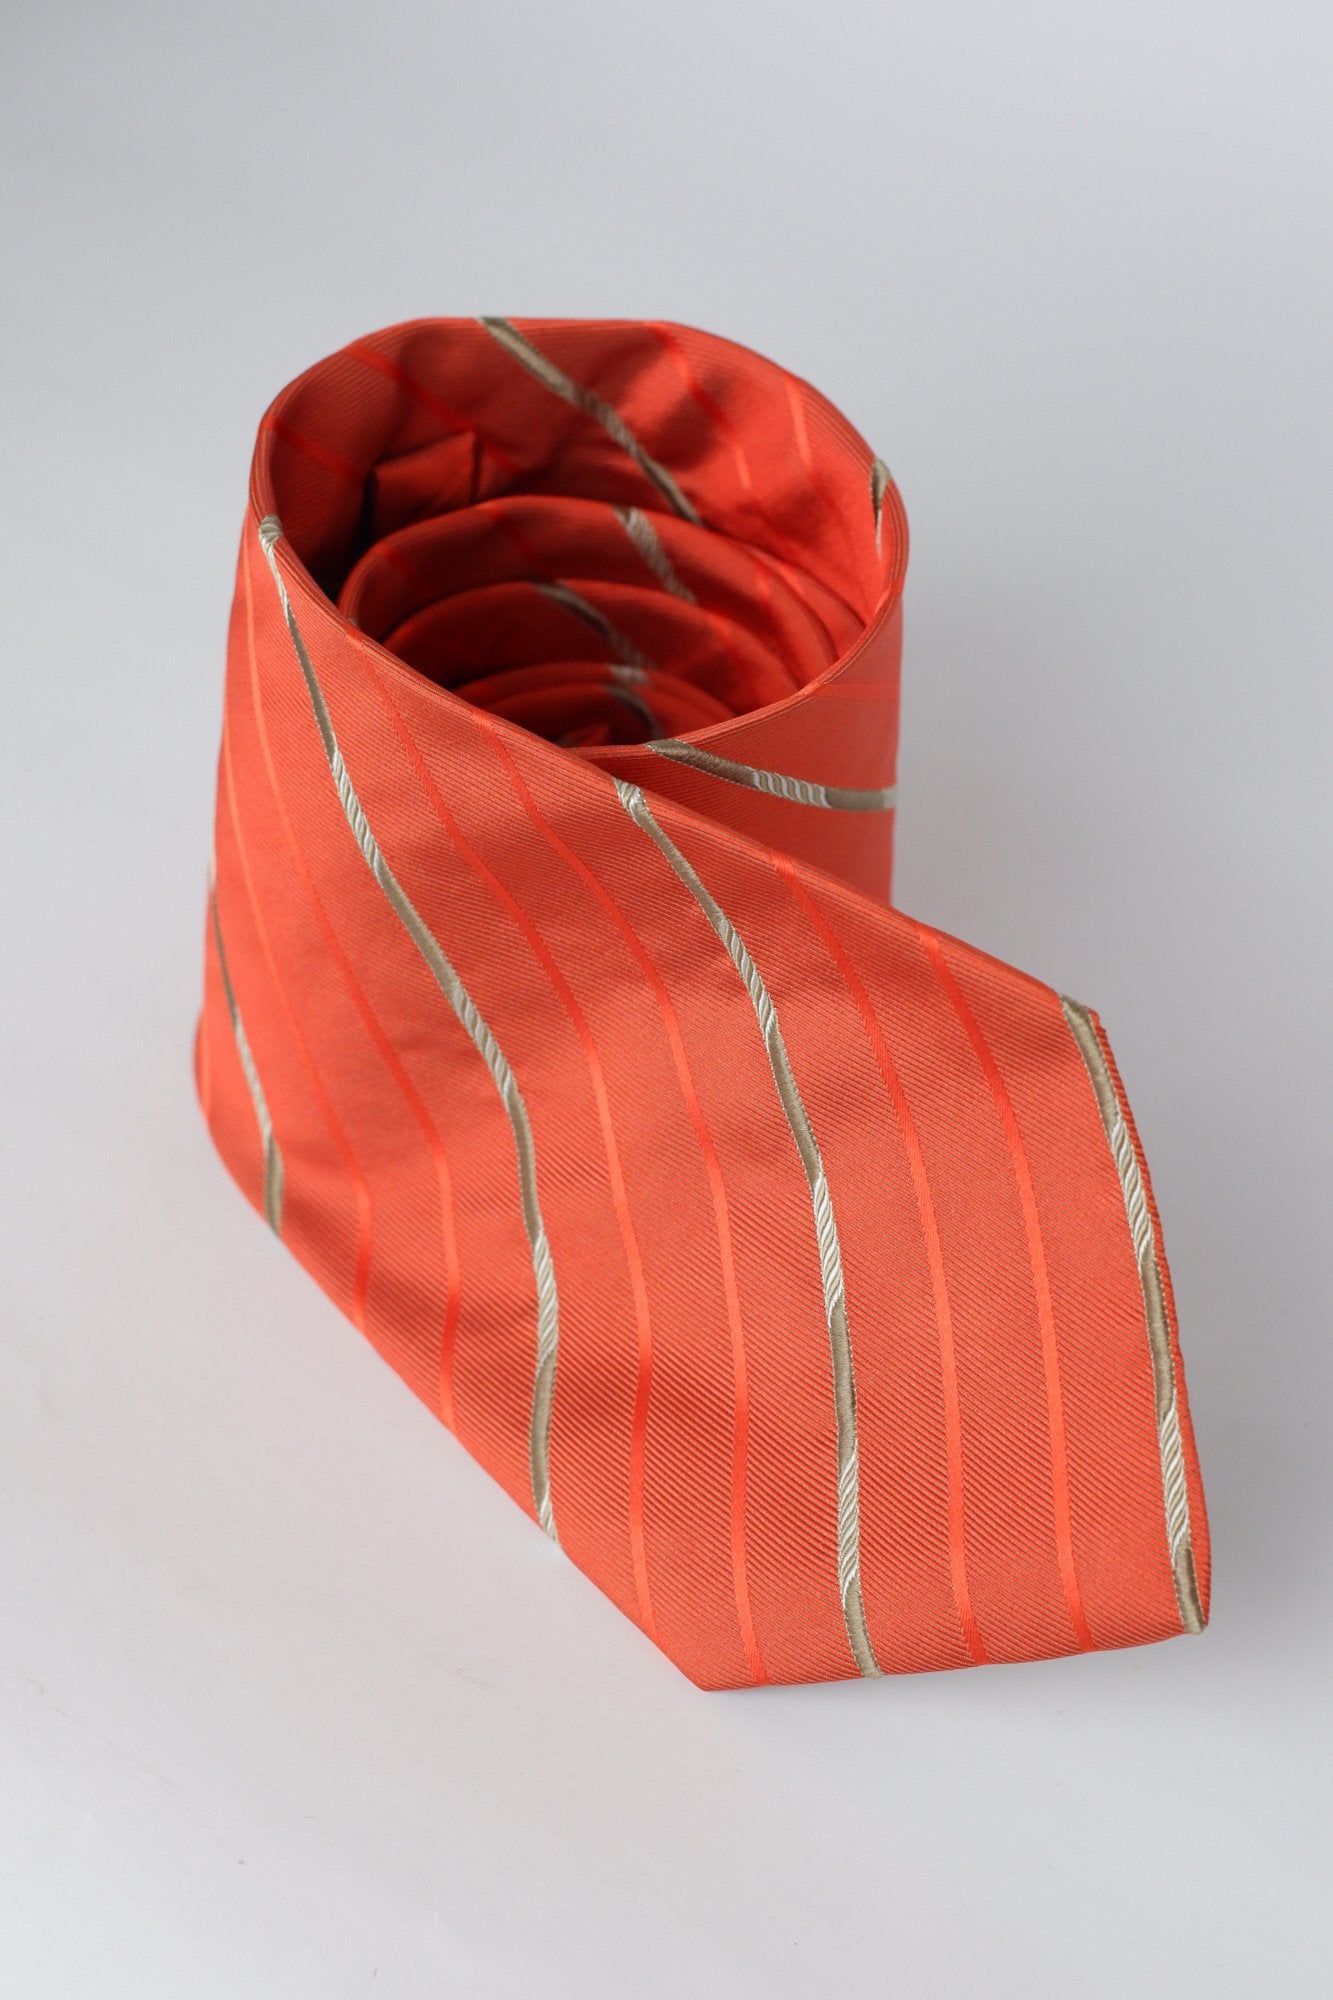 Gianfranco Ferrè Orange with Gold Stripes Necktie